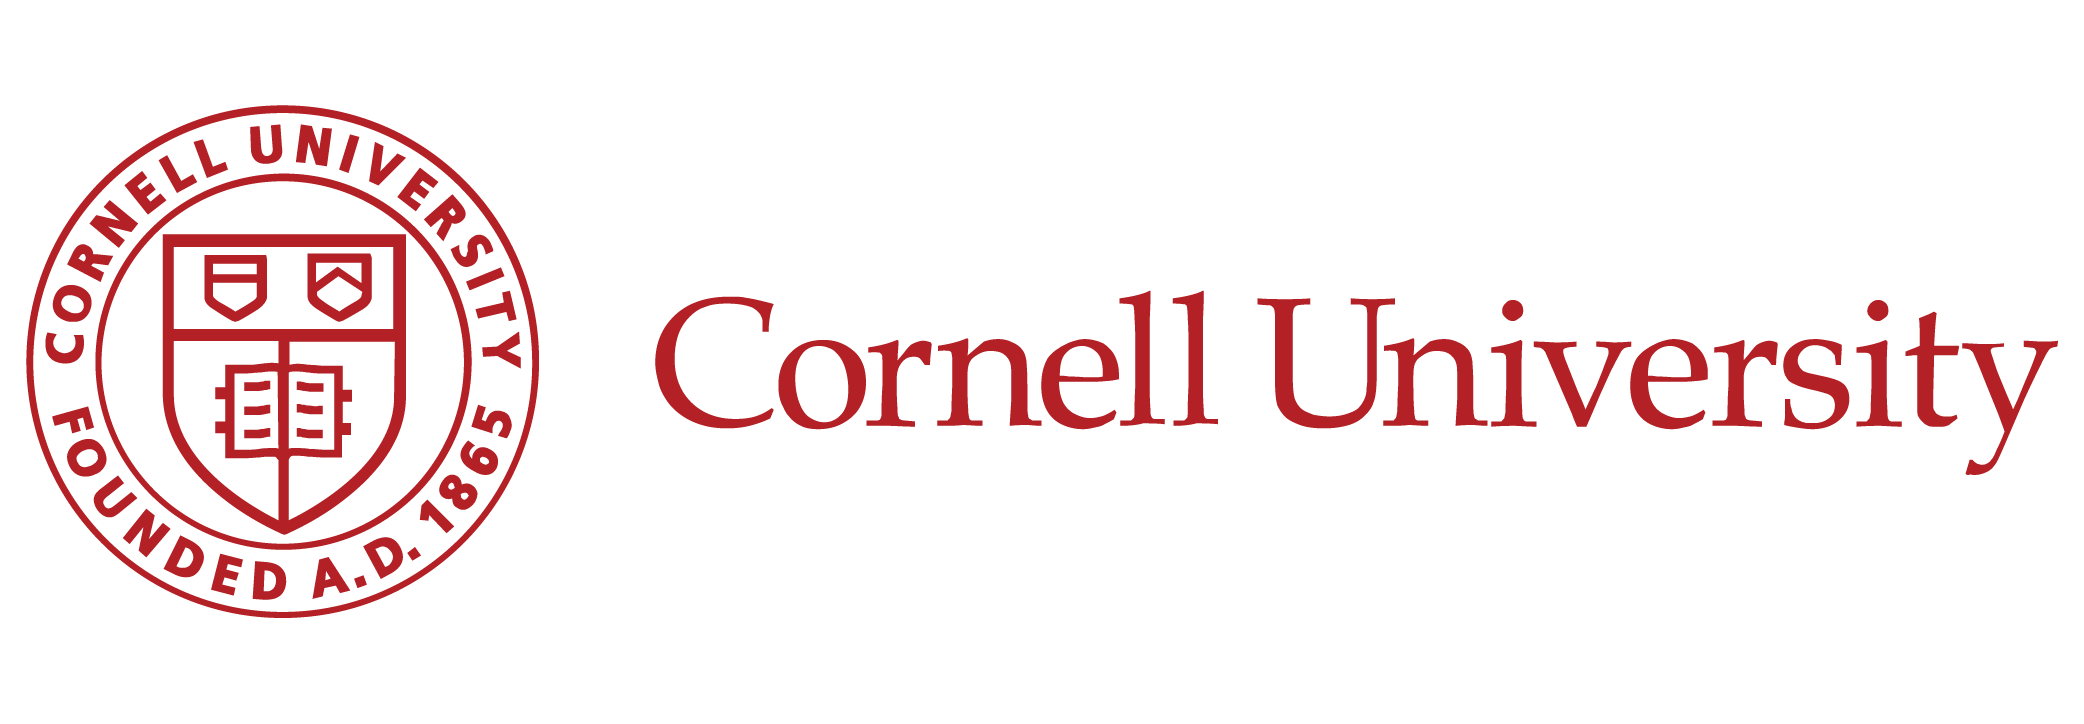 Cornell Alumni Associations